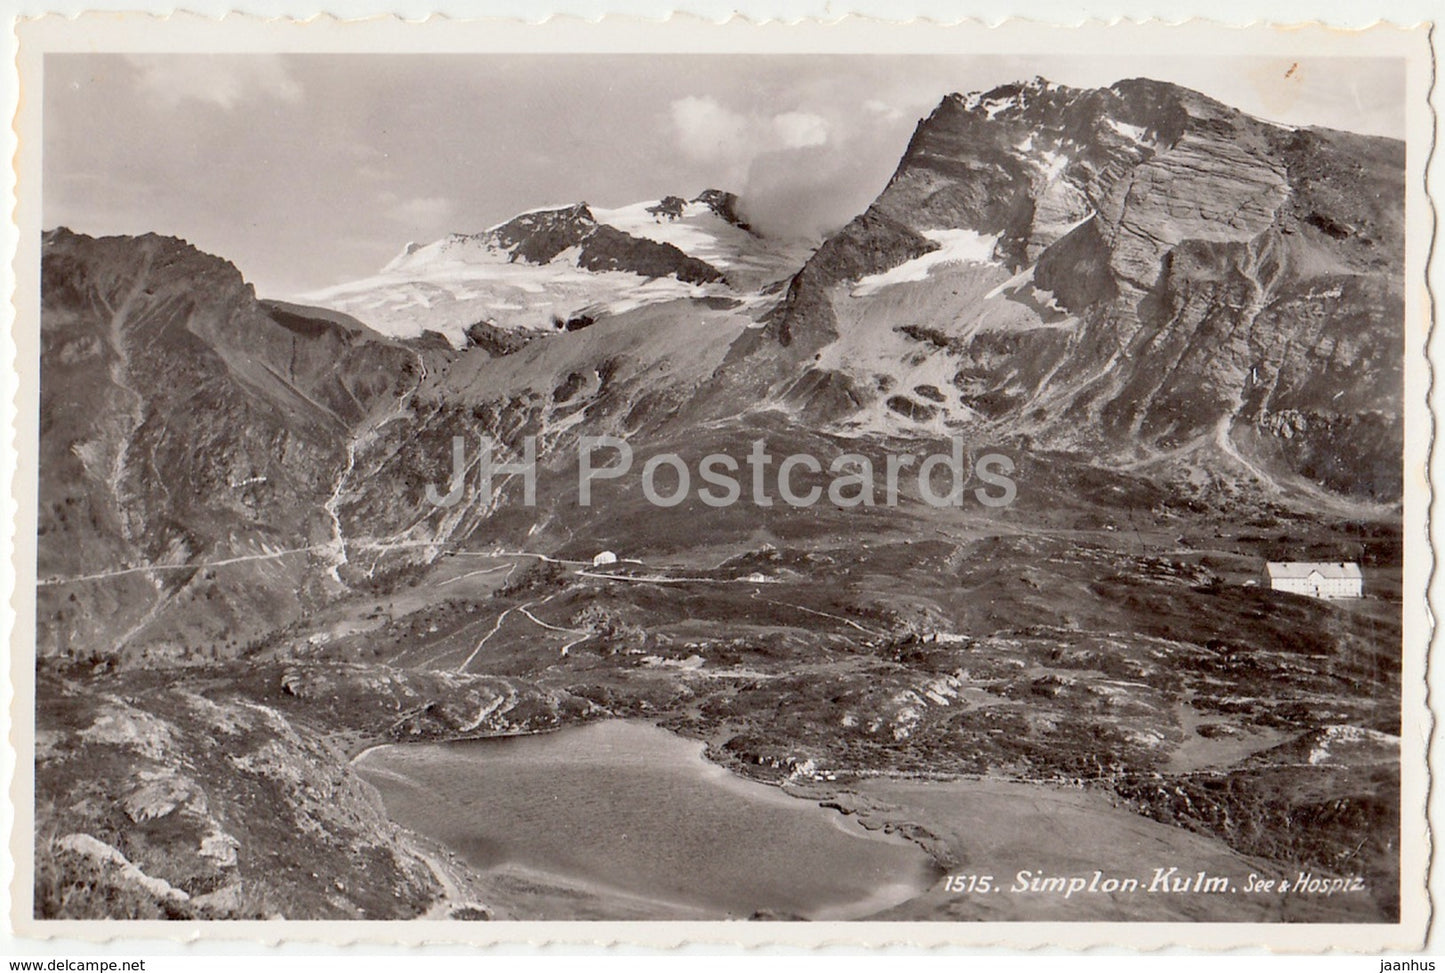 Simplon-Kulm - See & Hospiz - 1515 - Switzerland - 1958 - used - JH Postcards